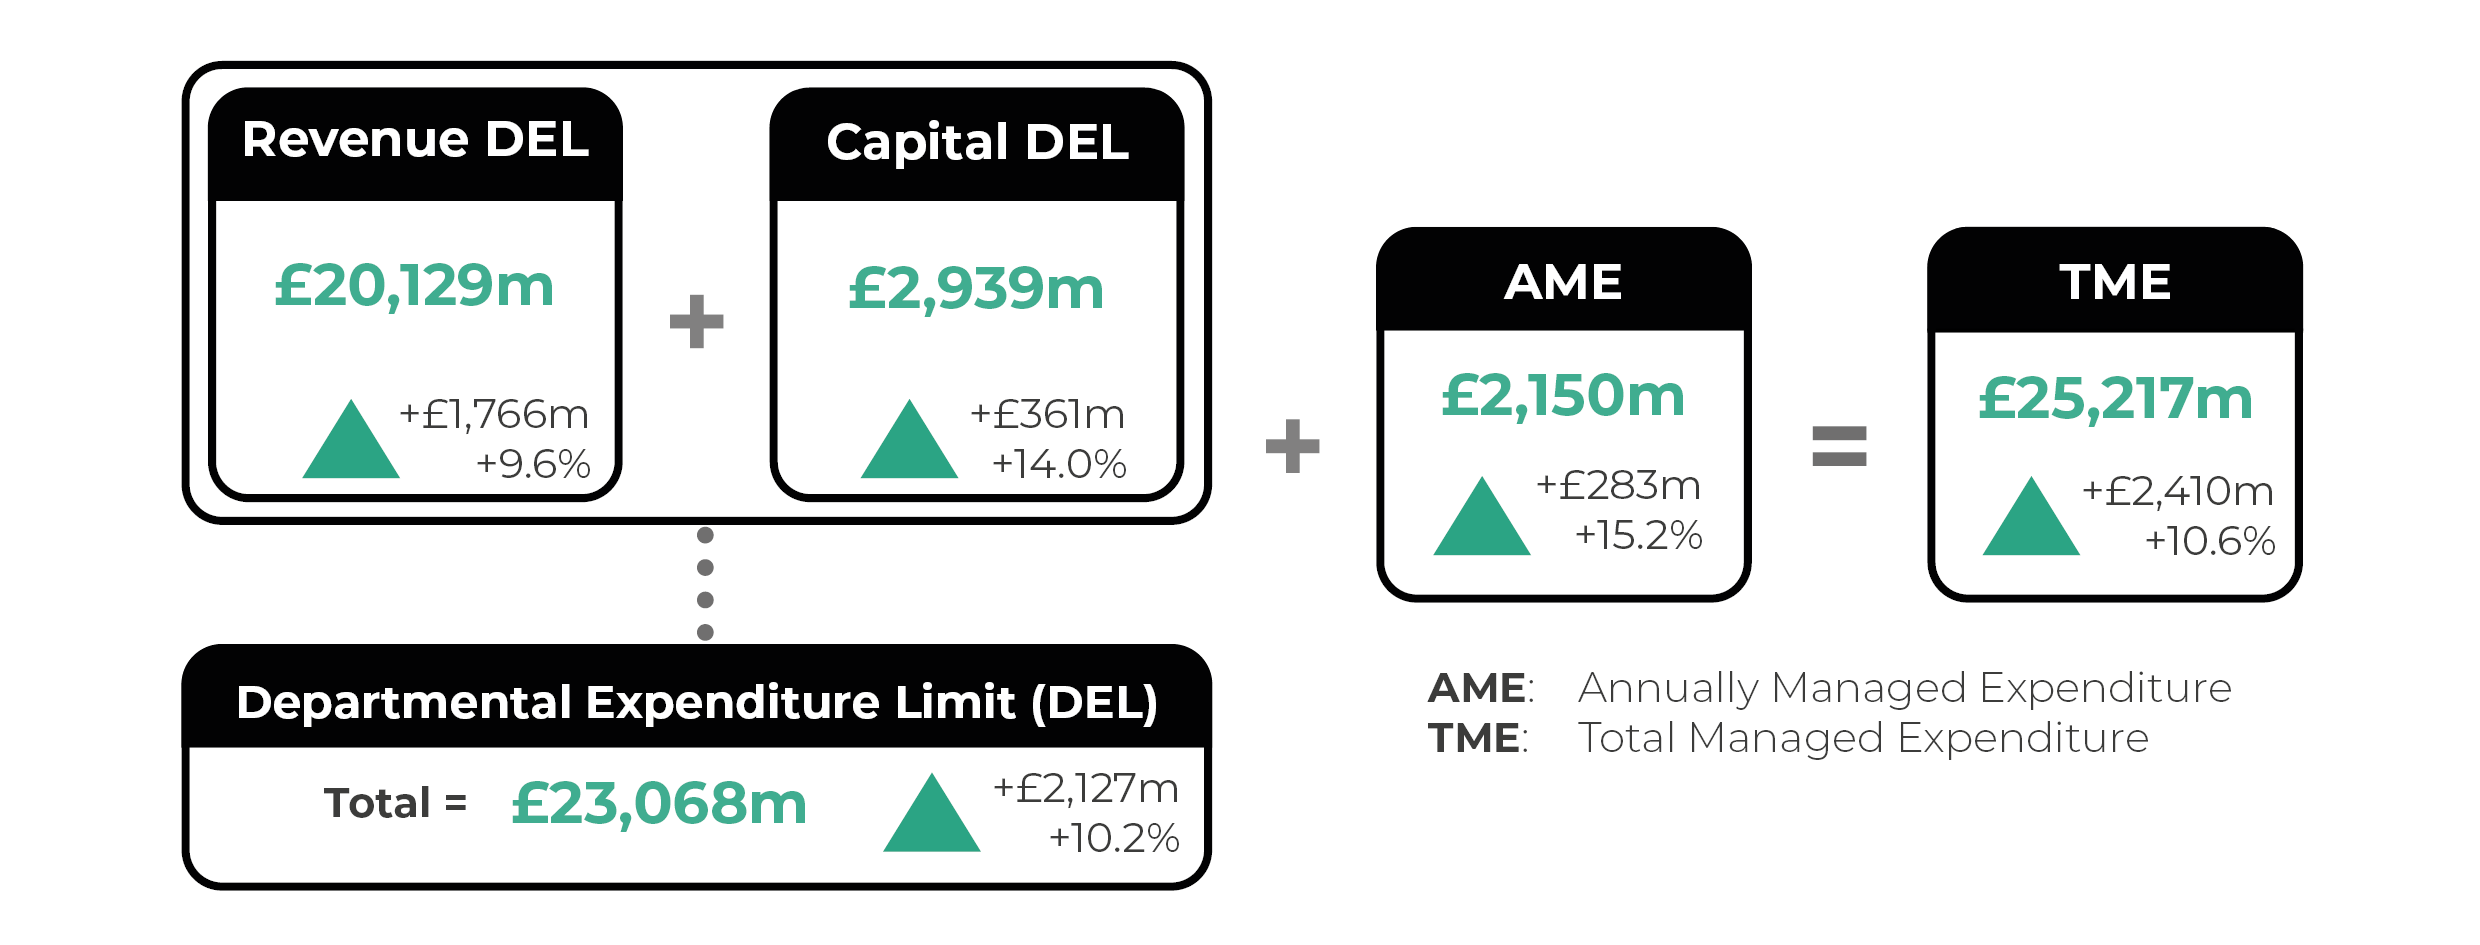 Revenue Departmental Expenditure Limit (DEL): £20,129m (up by £1,766m or 9.6%). Capital DEL: £2,939m (up by £361m or 14.0%). Total DEL: £23,068m (up by £2,127m or 10.2%). Annually Managed Expenditure (AME): £2,150m (up by £283m or 15.2%). Total Managed Expenditure (TME): £25,217m (up by £2,410m or 10.6%).